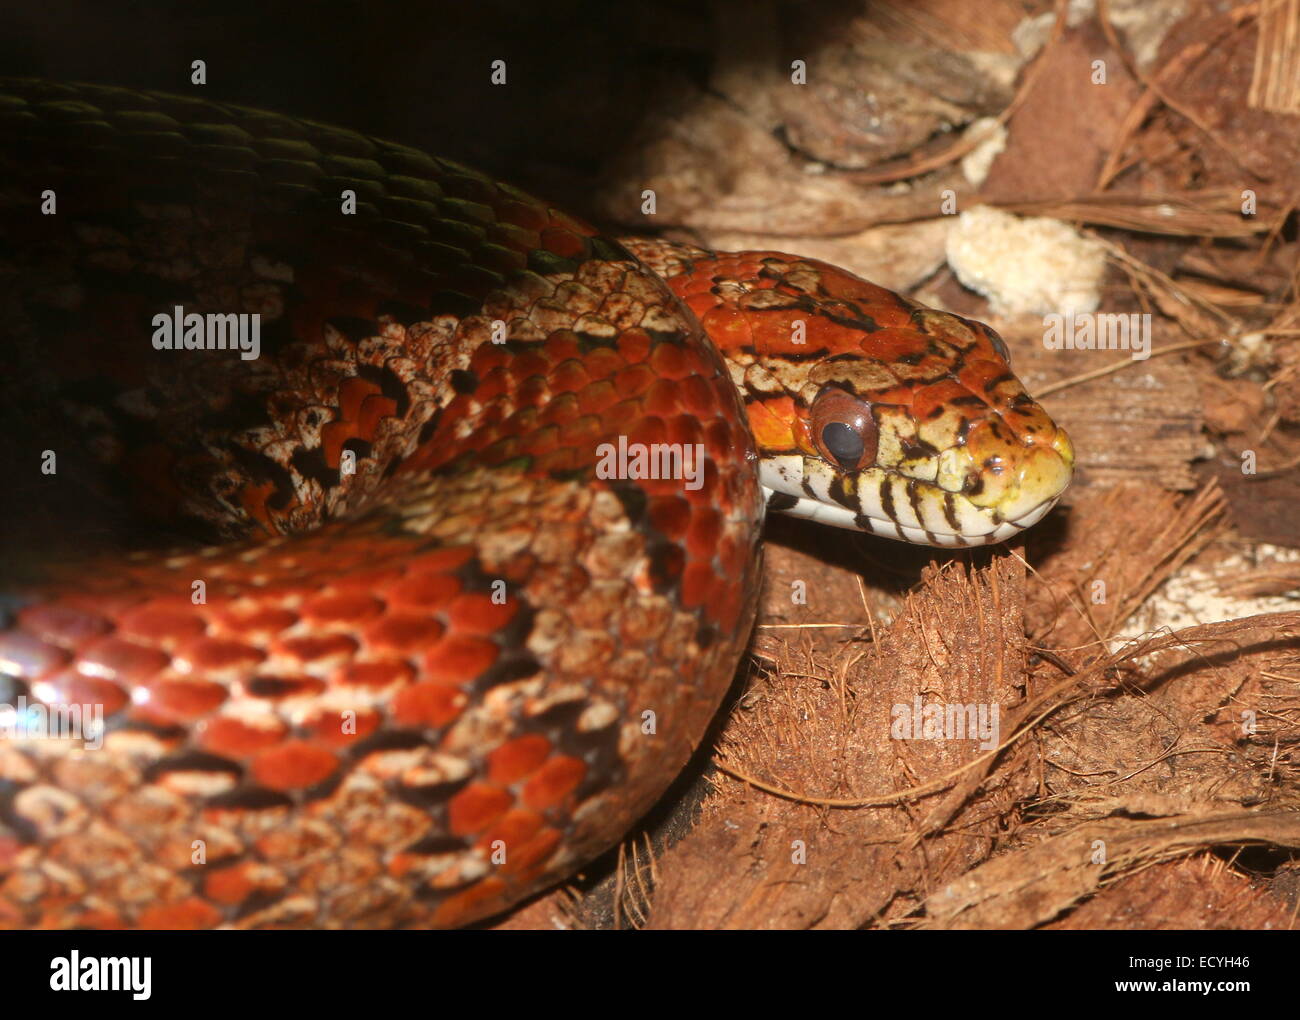 North American non venomous Corn Snake (Pantherophis guttatus) Stock Photo